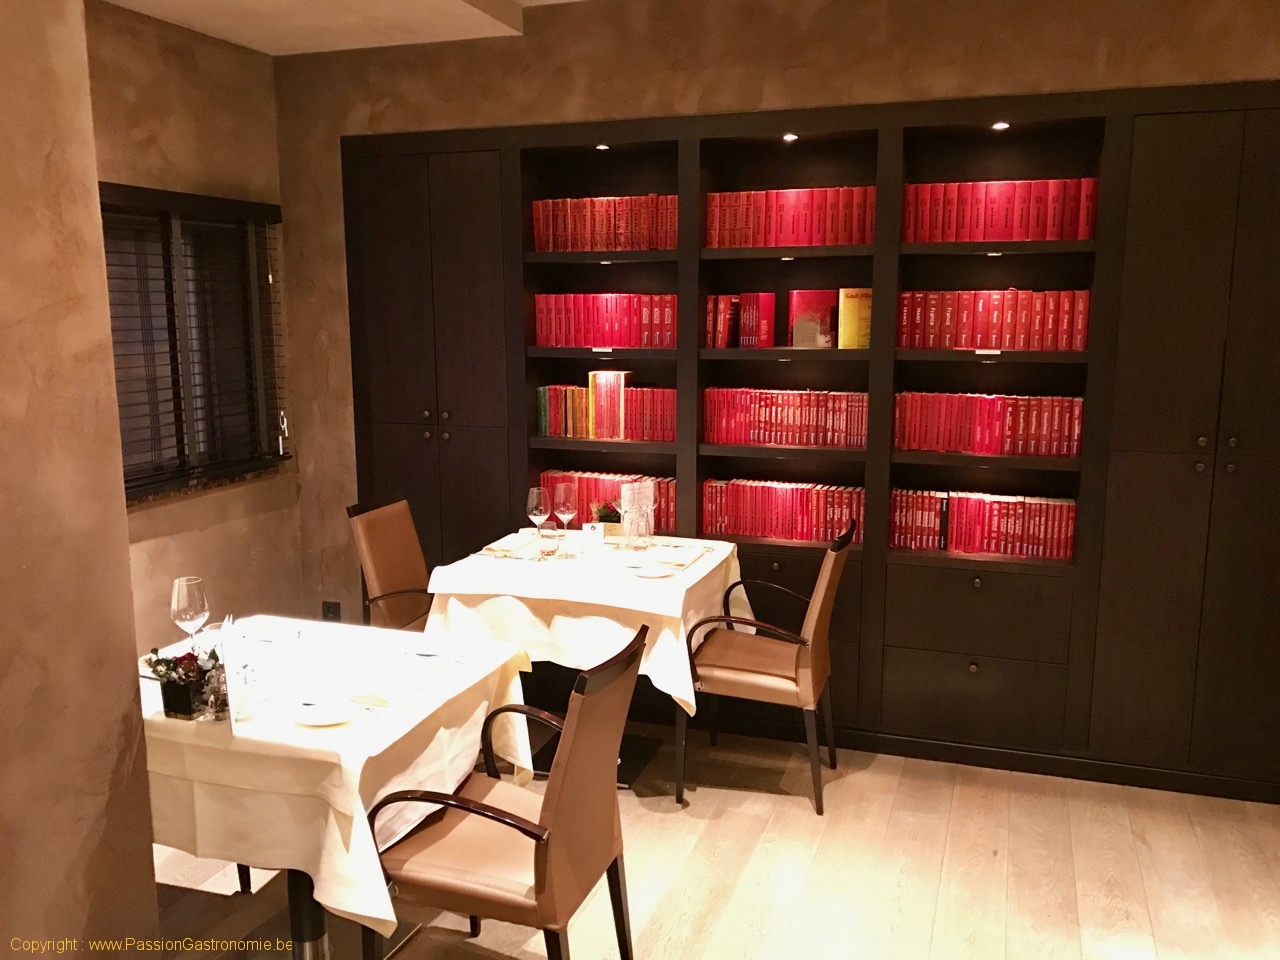 Restaurant Philippe Meyers - La collection de guides Michelin